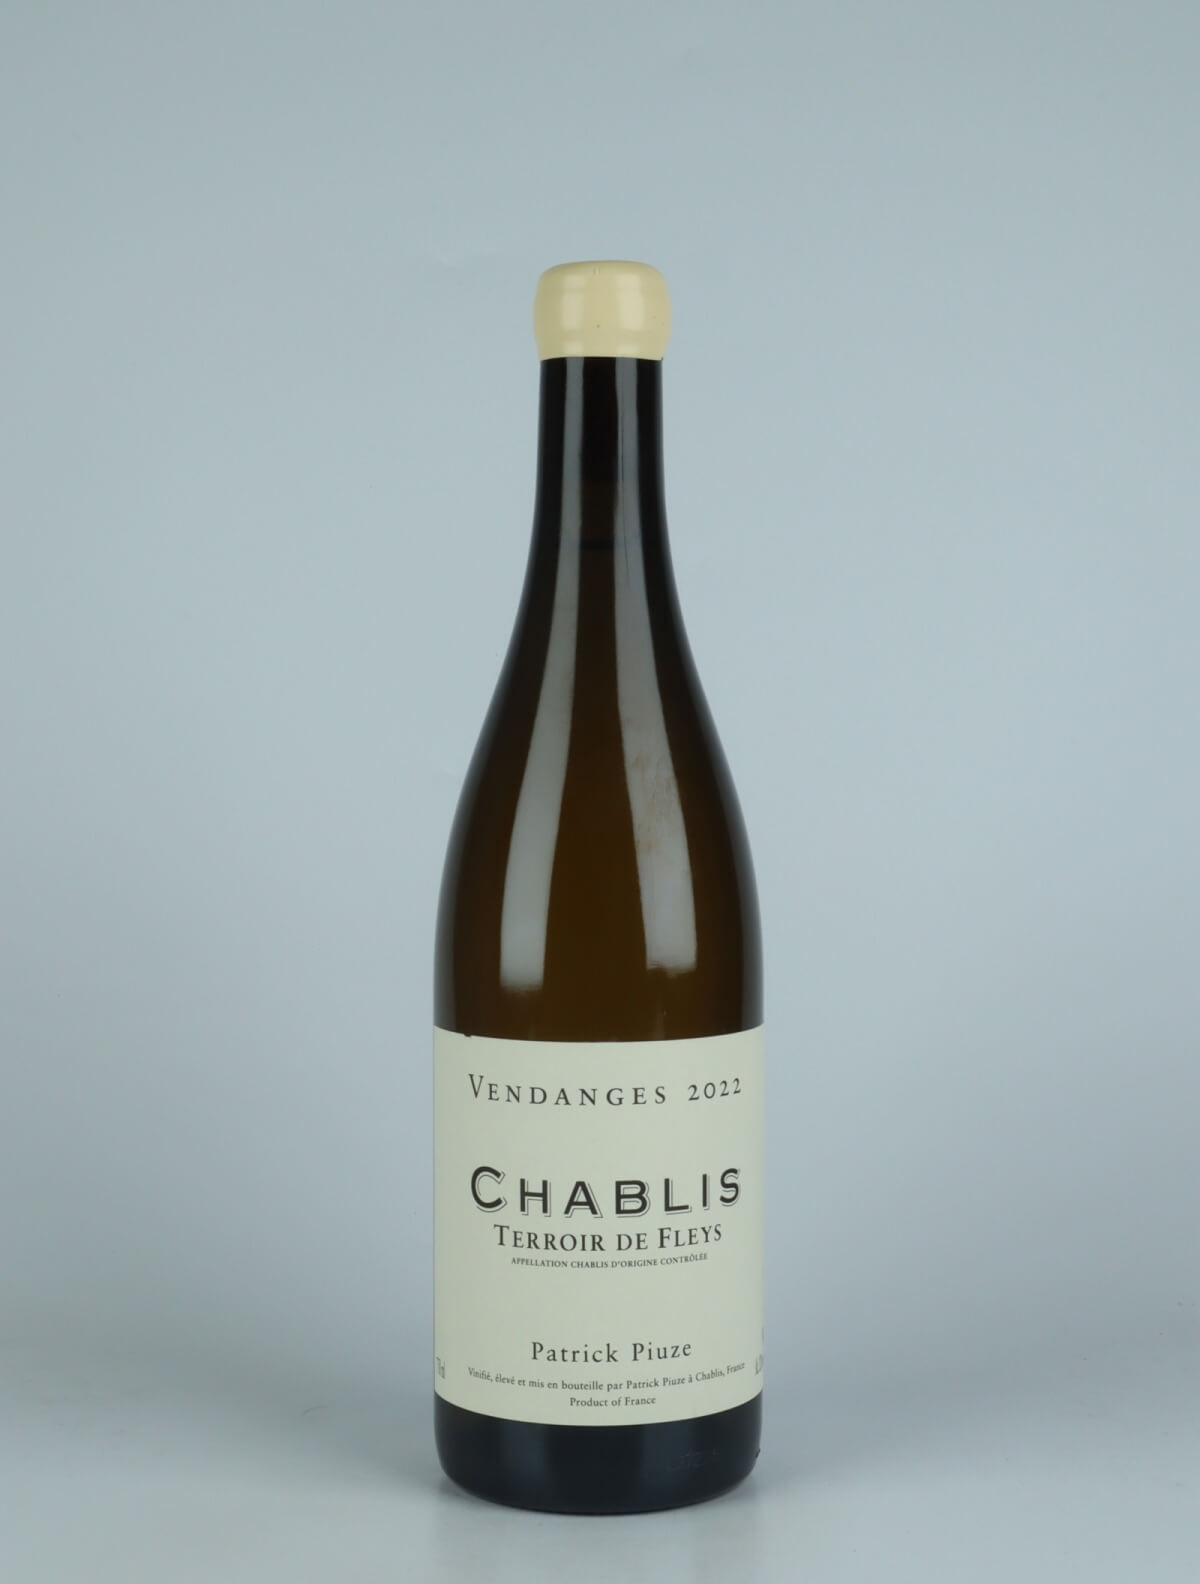 A bottle 2022 Chablis - Terroir de Fleys White wine from Patrick Piuze, Burgundy in France